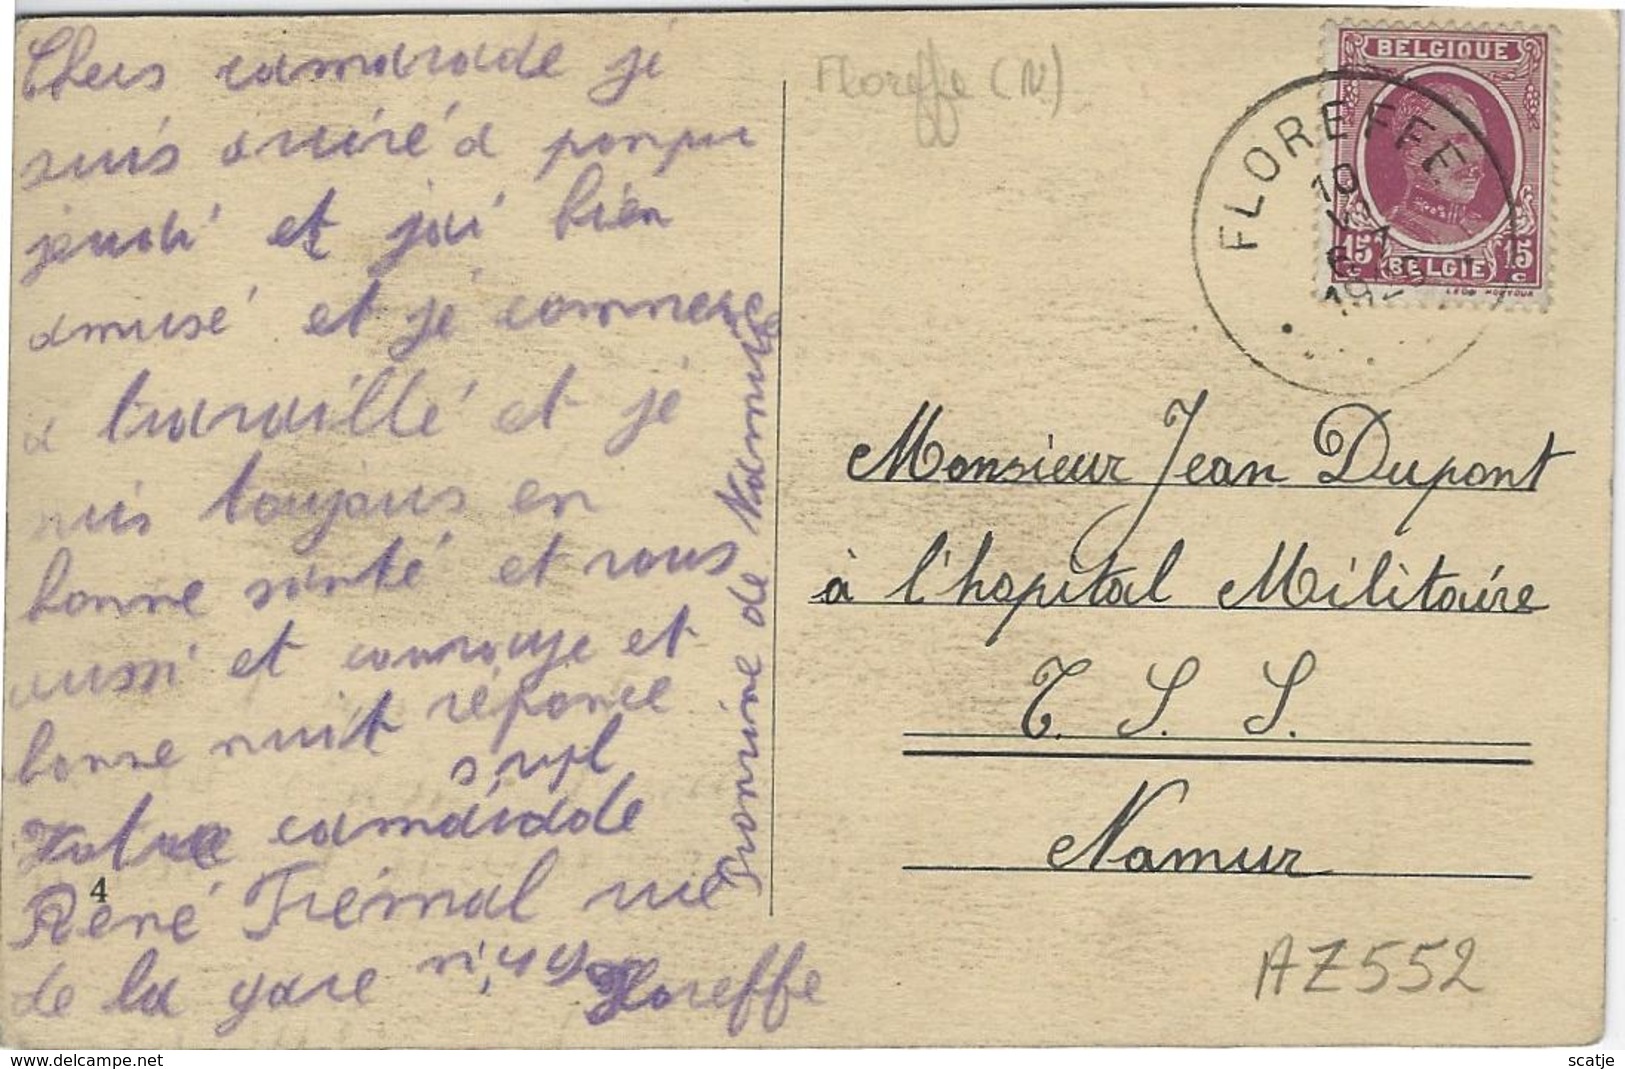 Séminaire De FLOREFFE.   -   1920  Naar   Namur - Floreffe